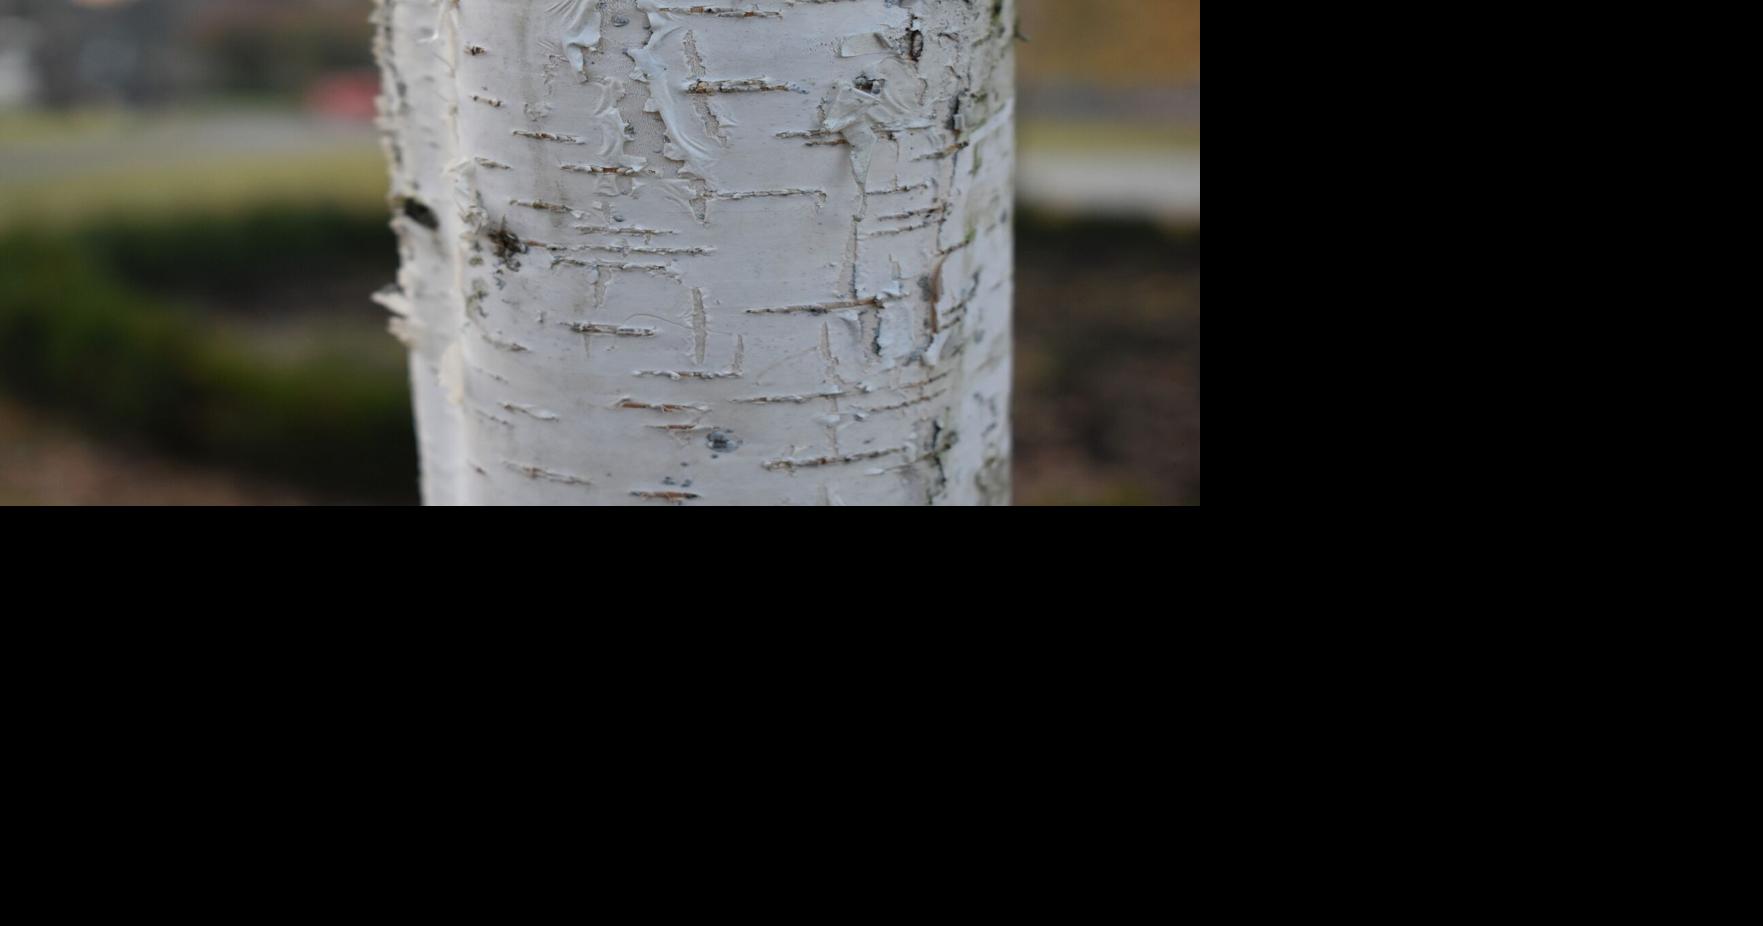 Birch bark is waterproof and flammable